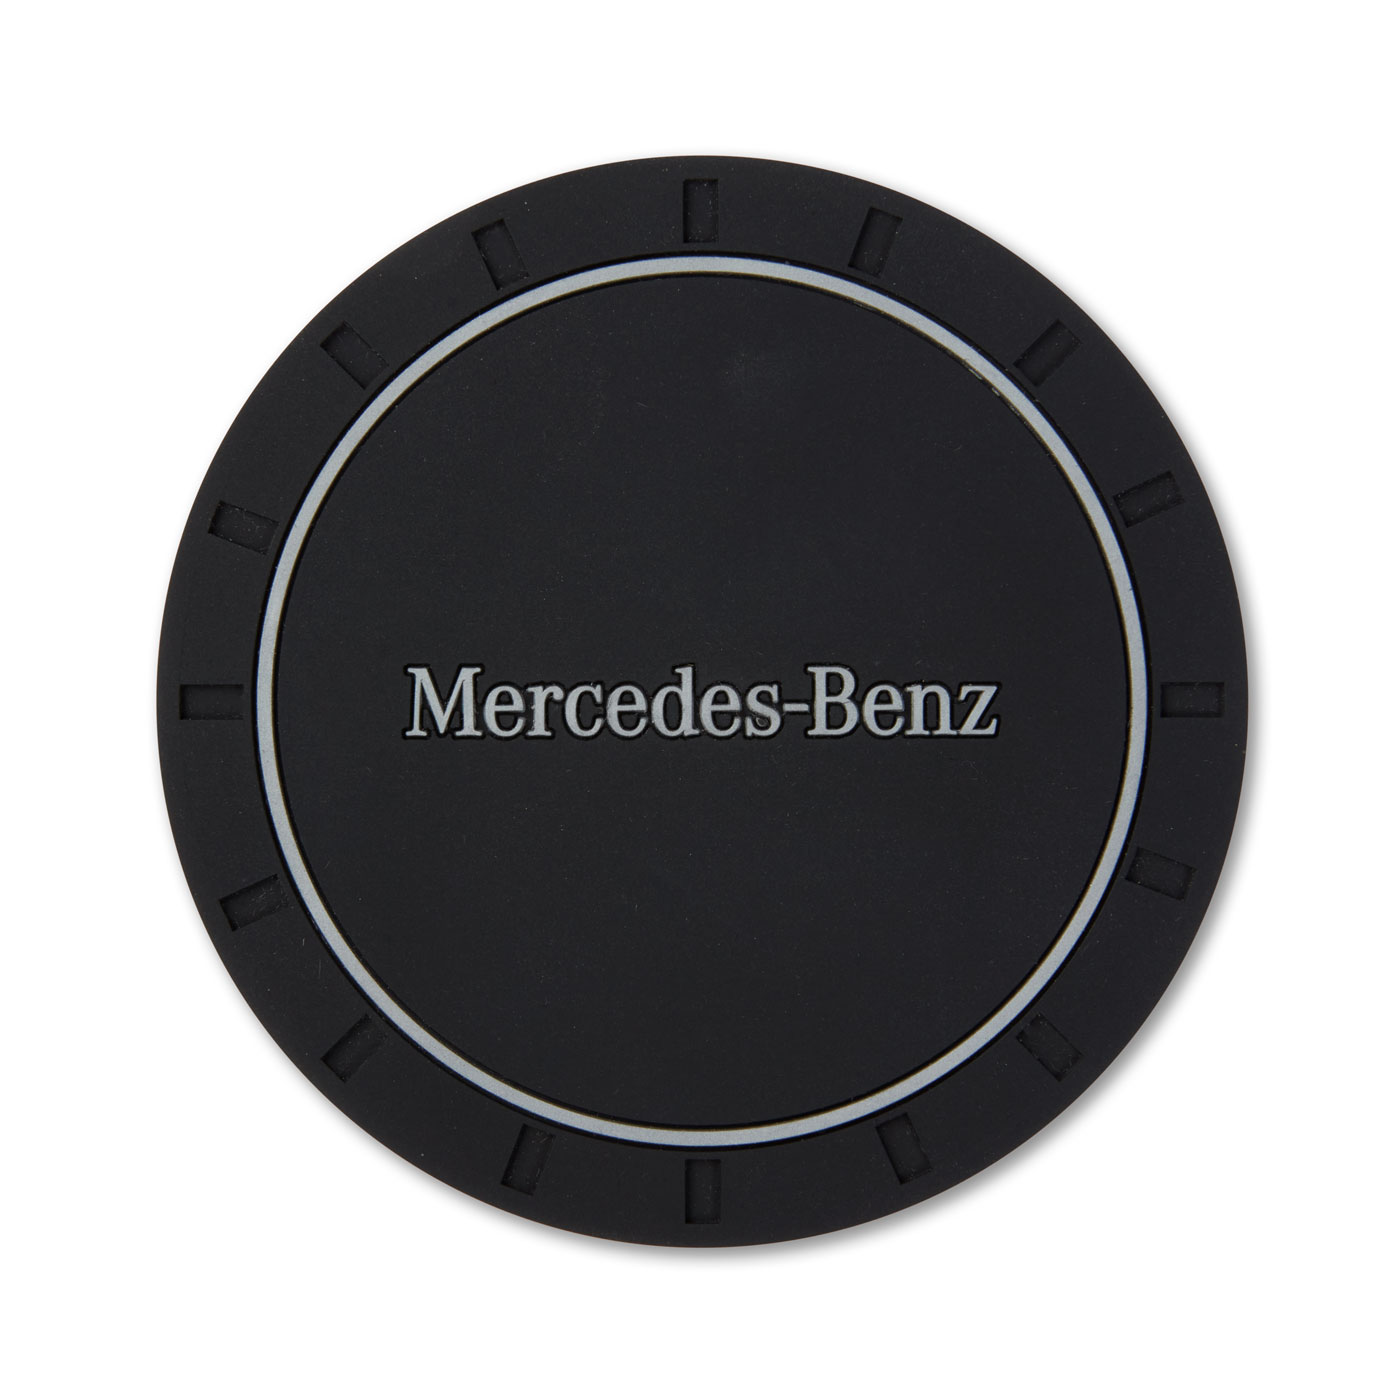 Coaster Set - Black  Mercedes-Benz Lifestyle Collection